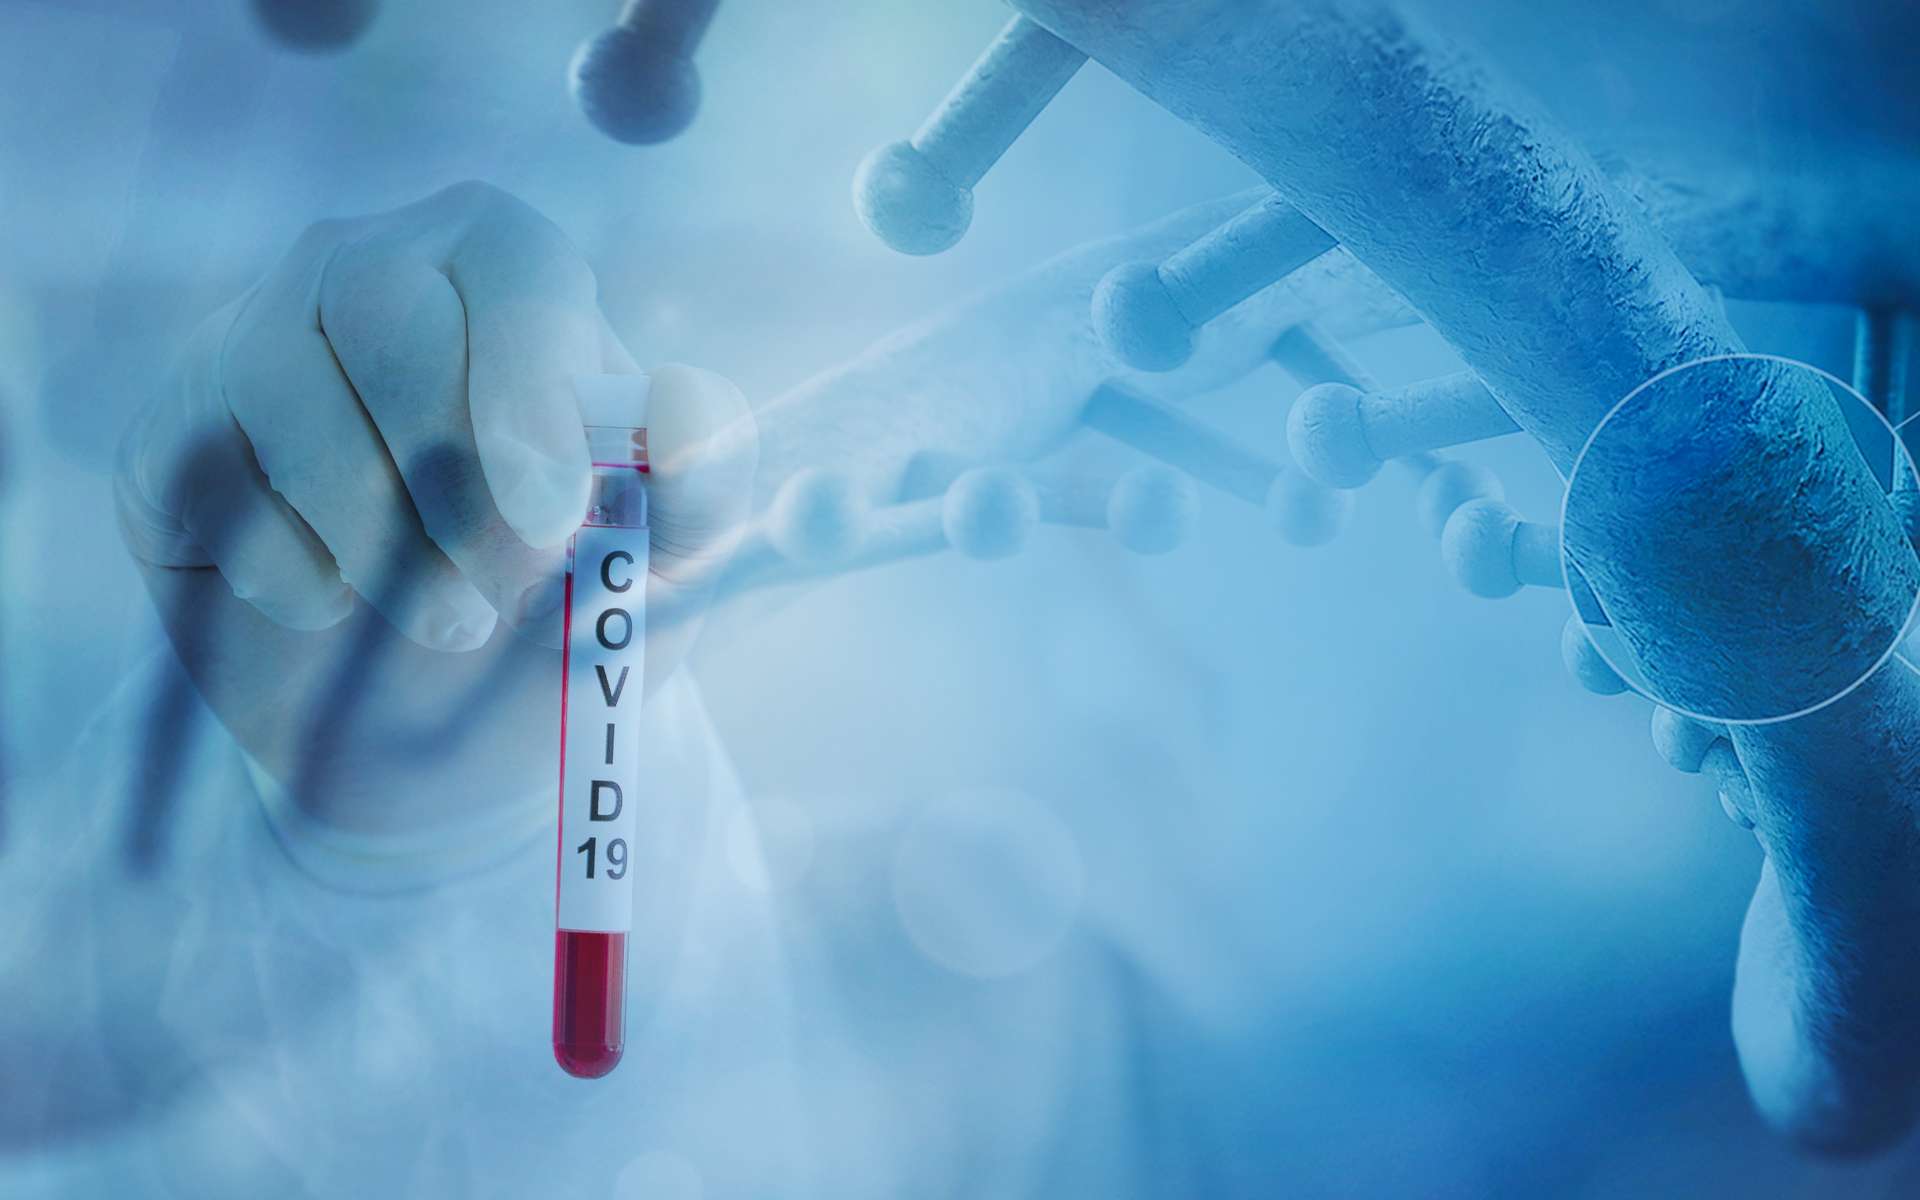 Le vaccin contre la Covid-19 a une balance bénéfice risque très positive. © Mongkolchon, Adobe Stock